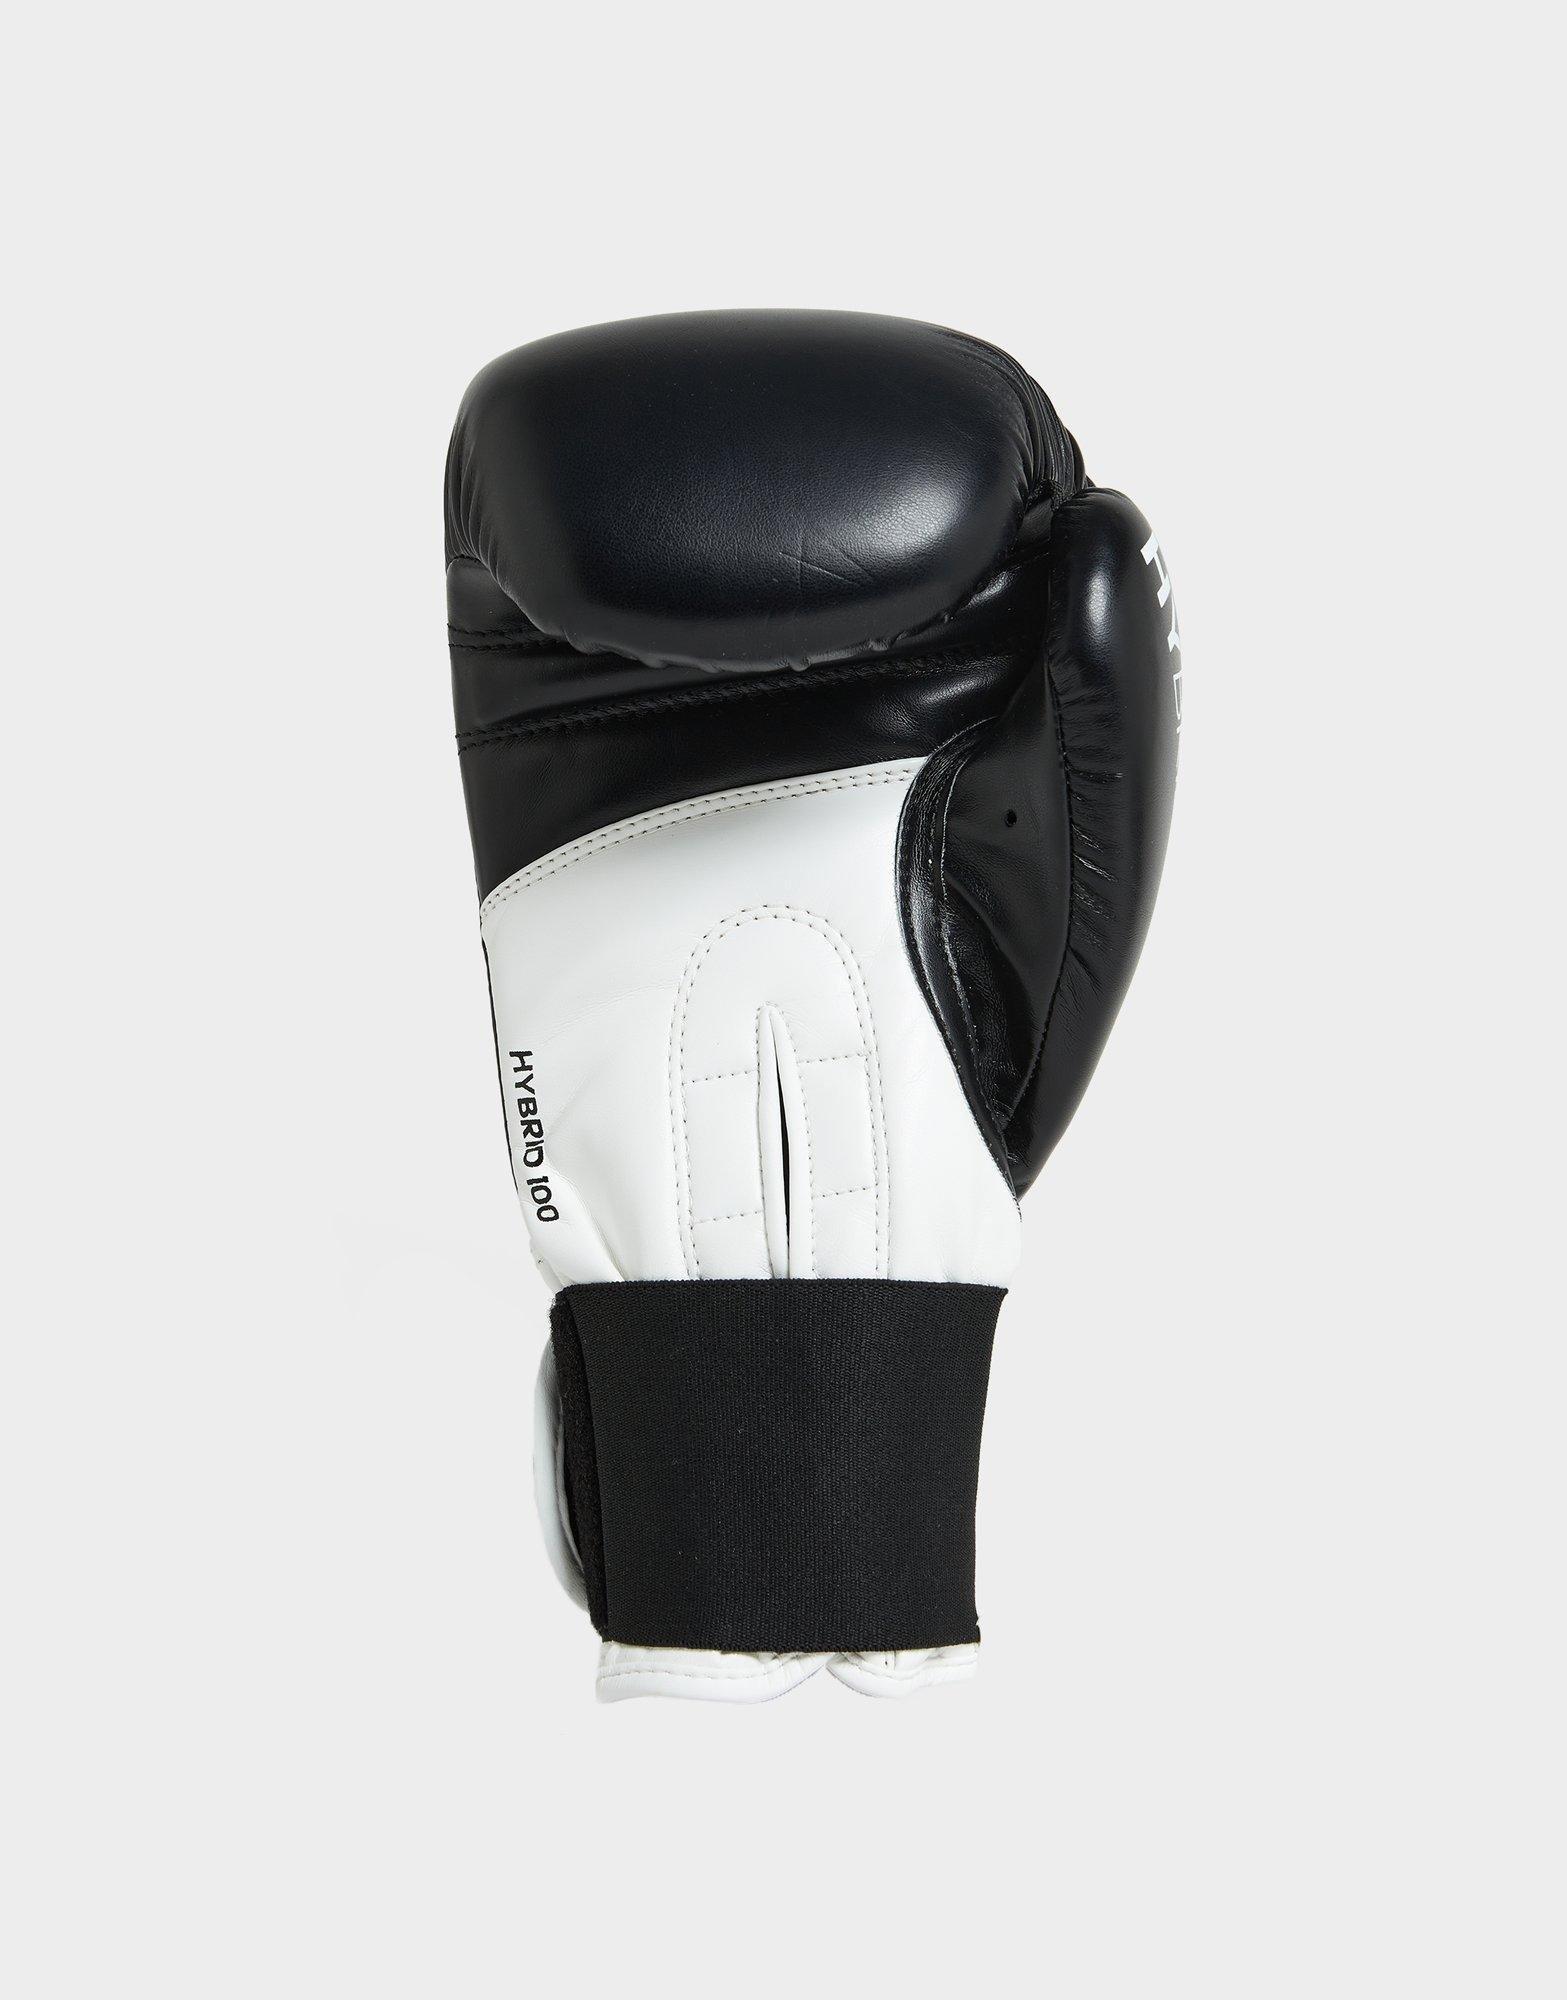 adidas hybrid 100 boxing gloves 16oz